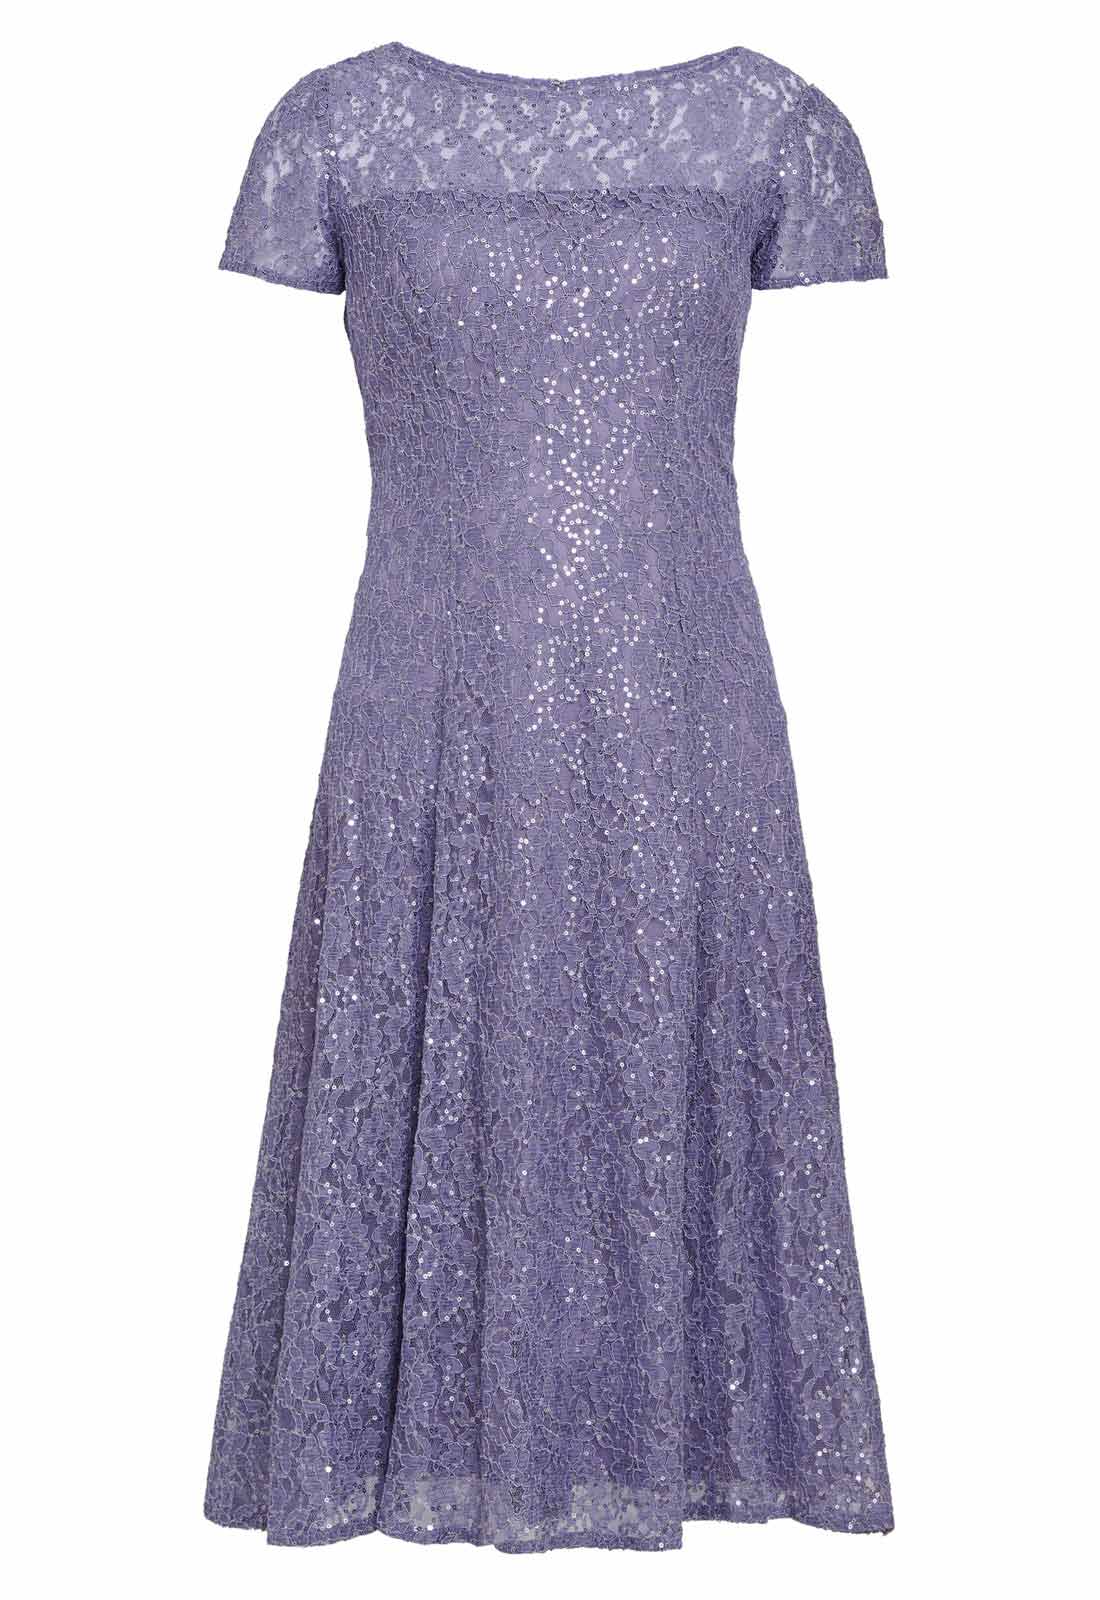 Gina Bacconi Lilac Genny Cocktail Dress